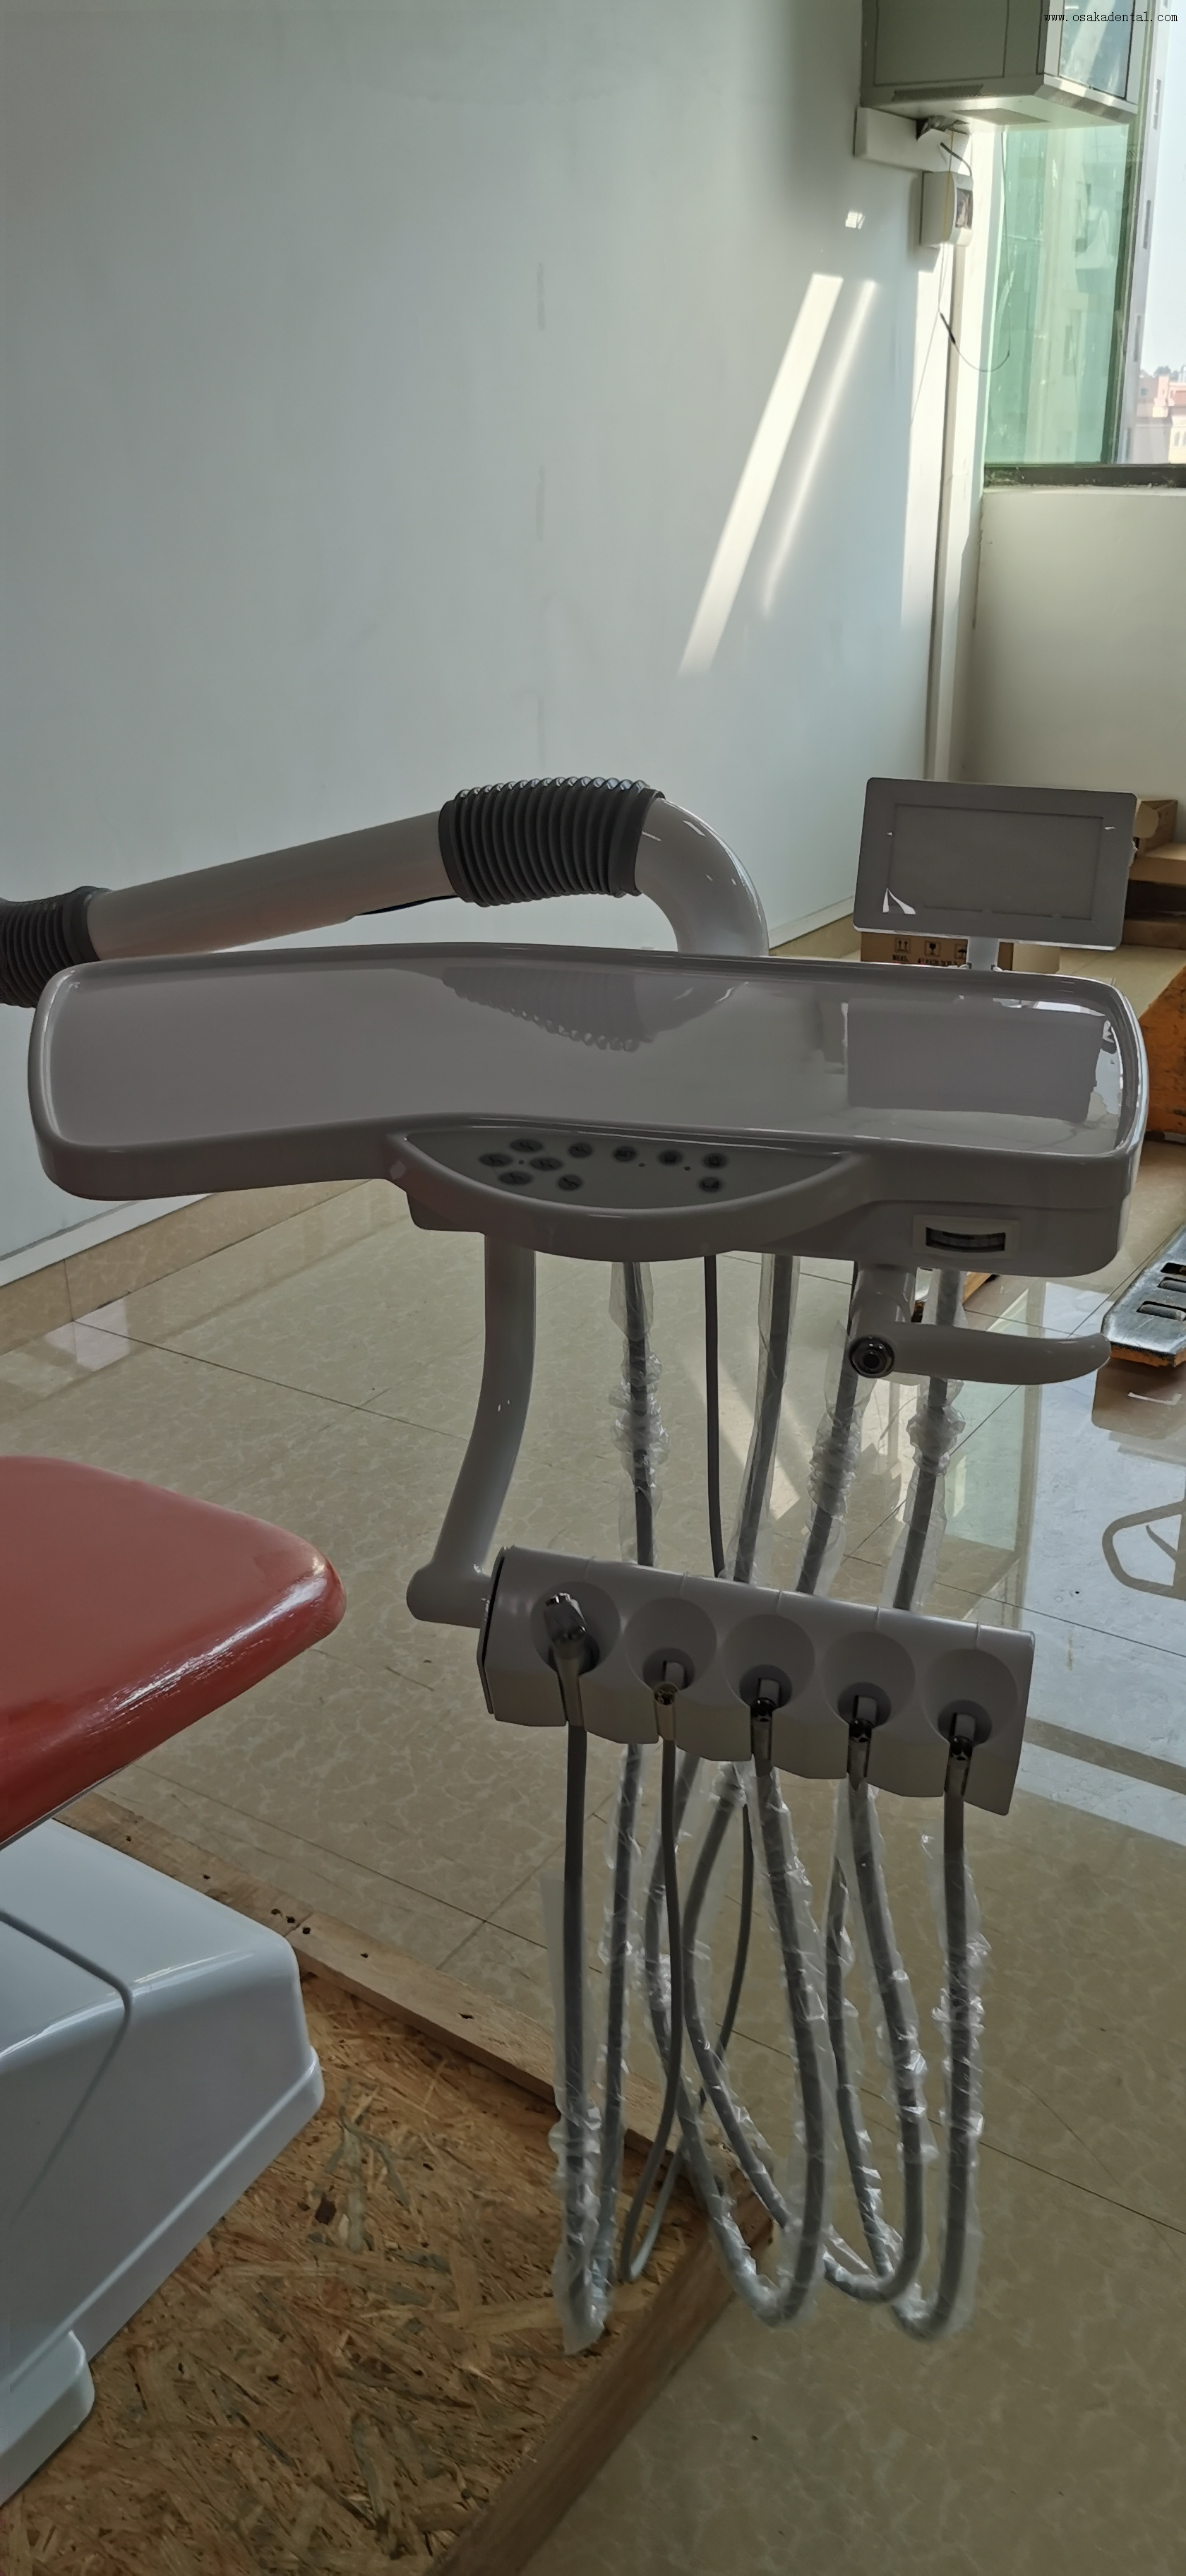 LED Lamp Double Arm Dental Chair Unit